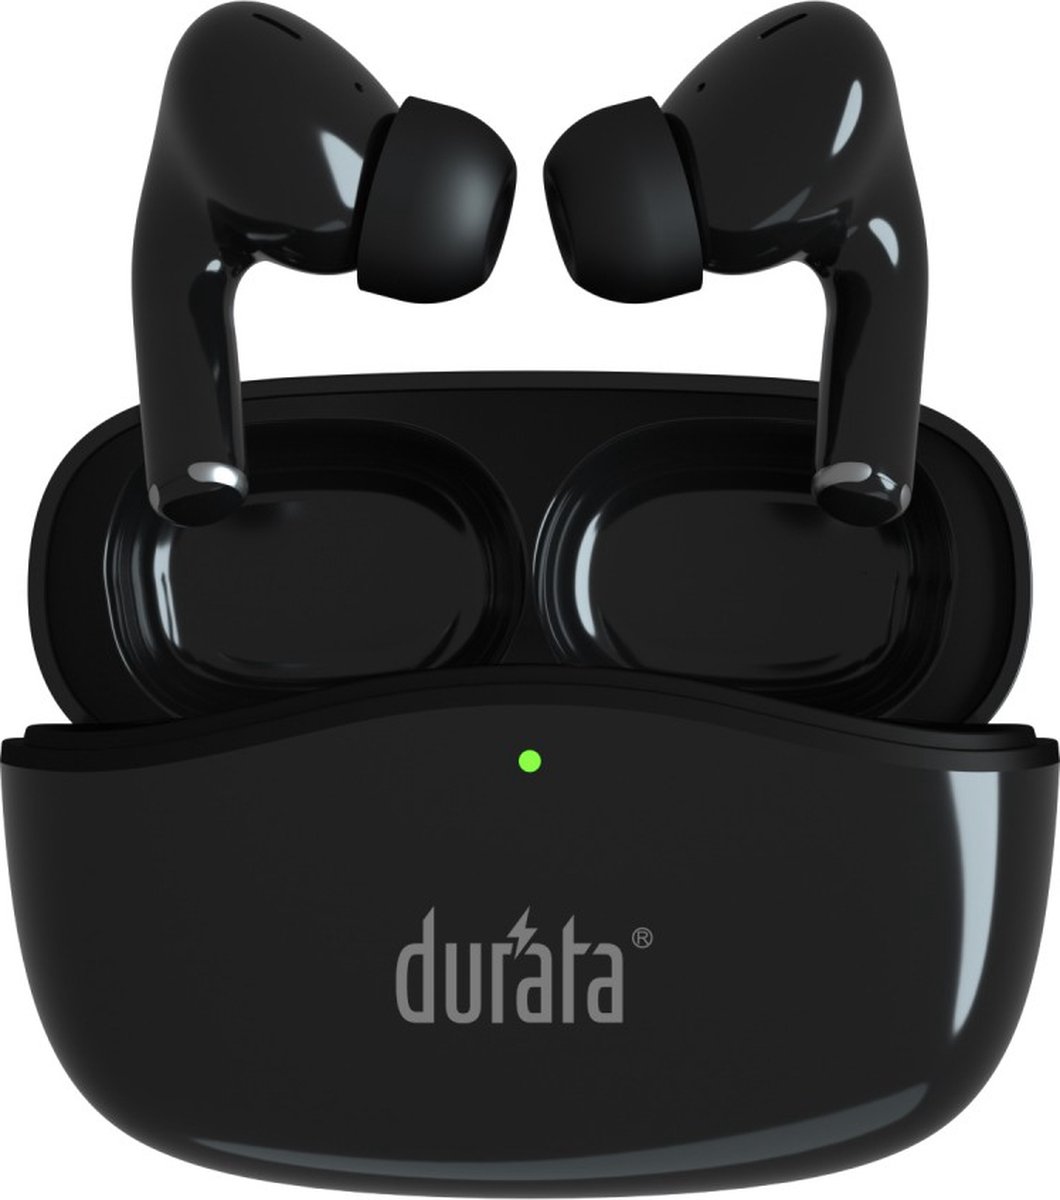 DURATA Premium quality Crystal clear wireless headset - Black